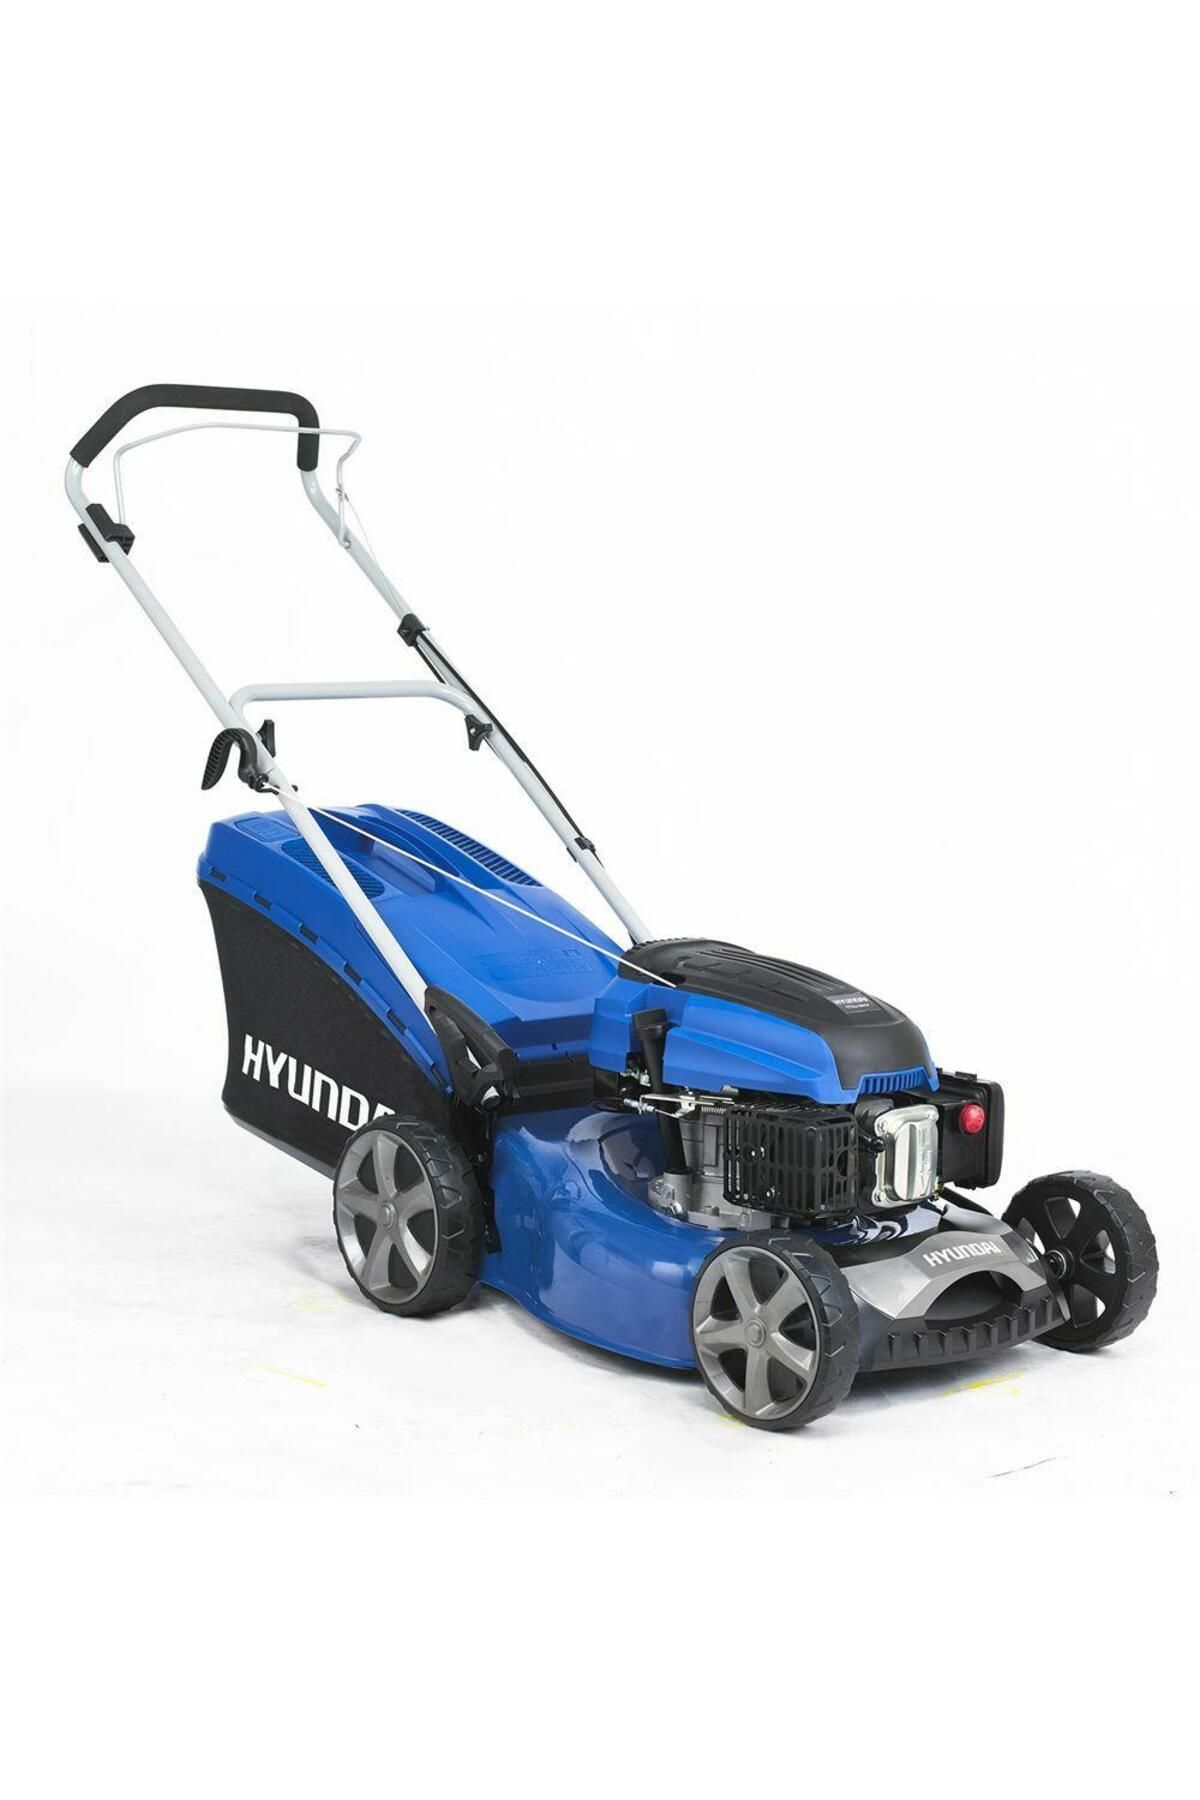 Hyundai Hyundaı Hym460P 46 Cm Benzinli Çim Biçme Makinası